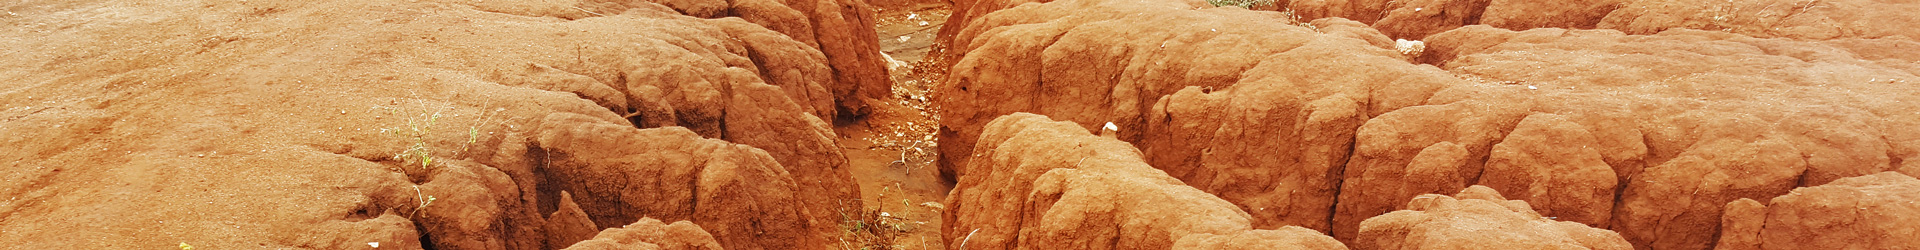 West Pokot Pastoralist Recent Climate Change adaptation strategies: Camel Rearing